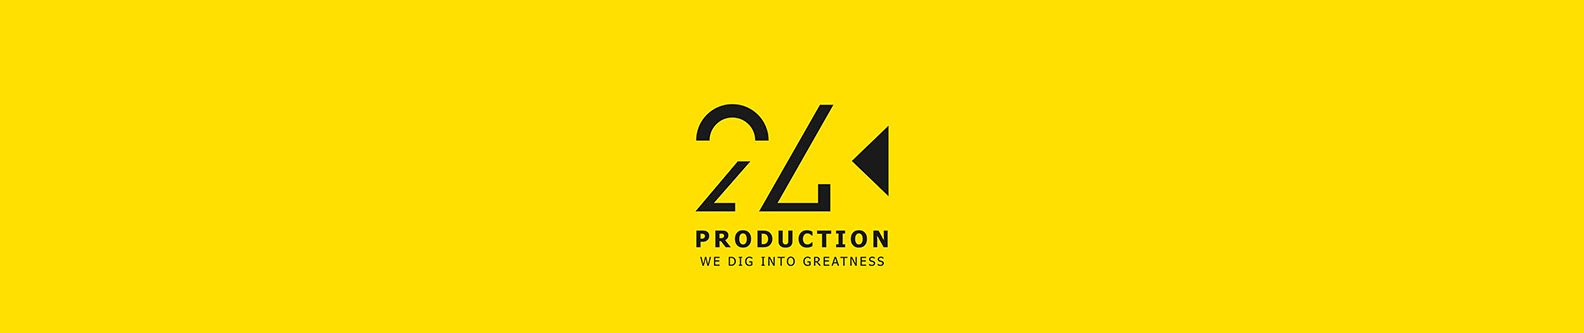 24K Production's profile banner